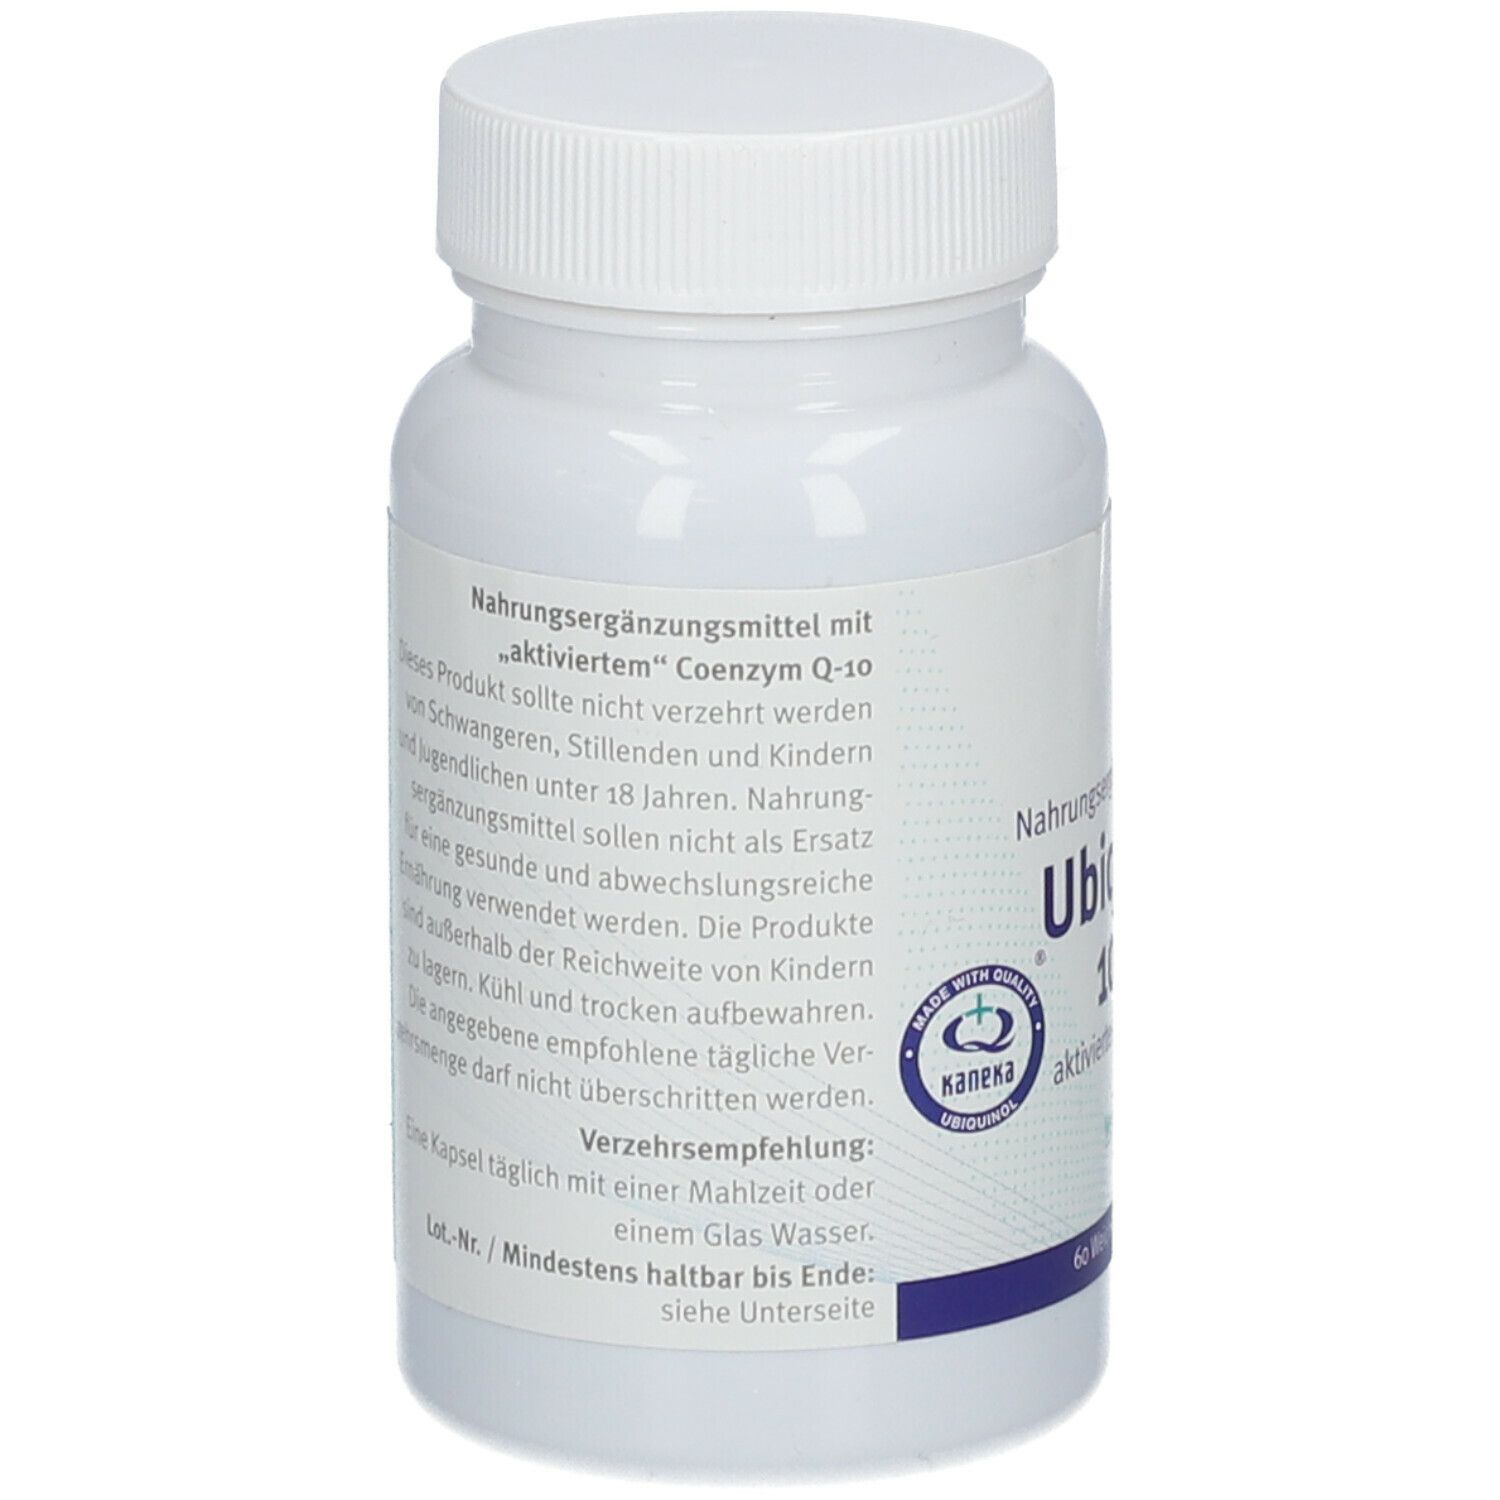 Coenzyme Q10 Ubiquinol 100 mg